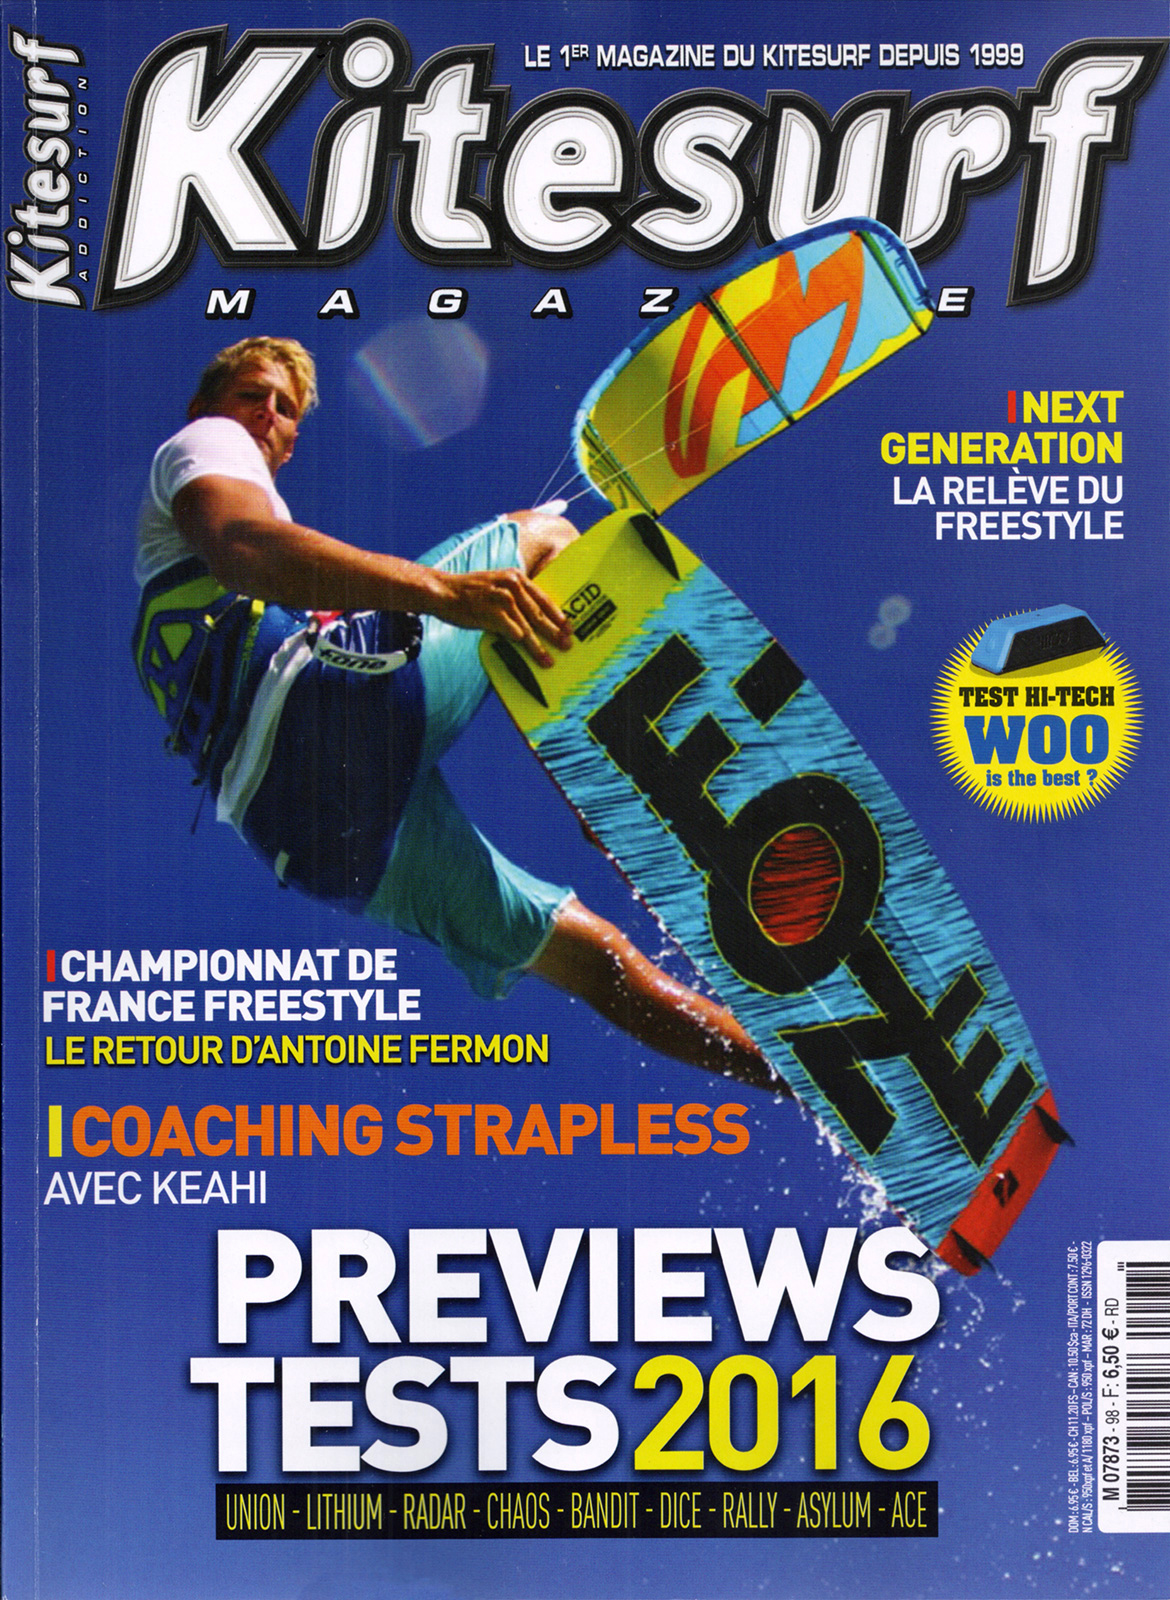 Kitesurf Magazine fait l’article sur le TKC2015